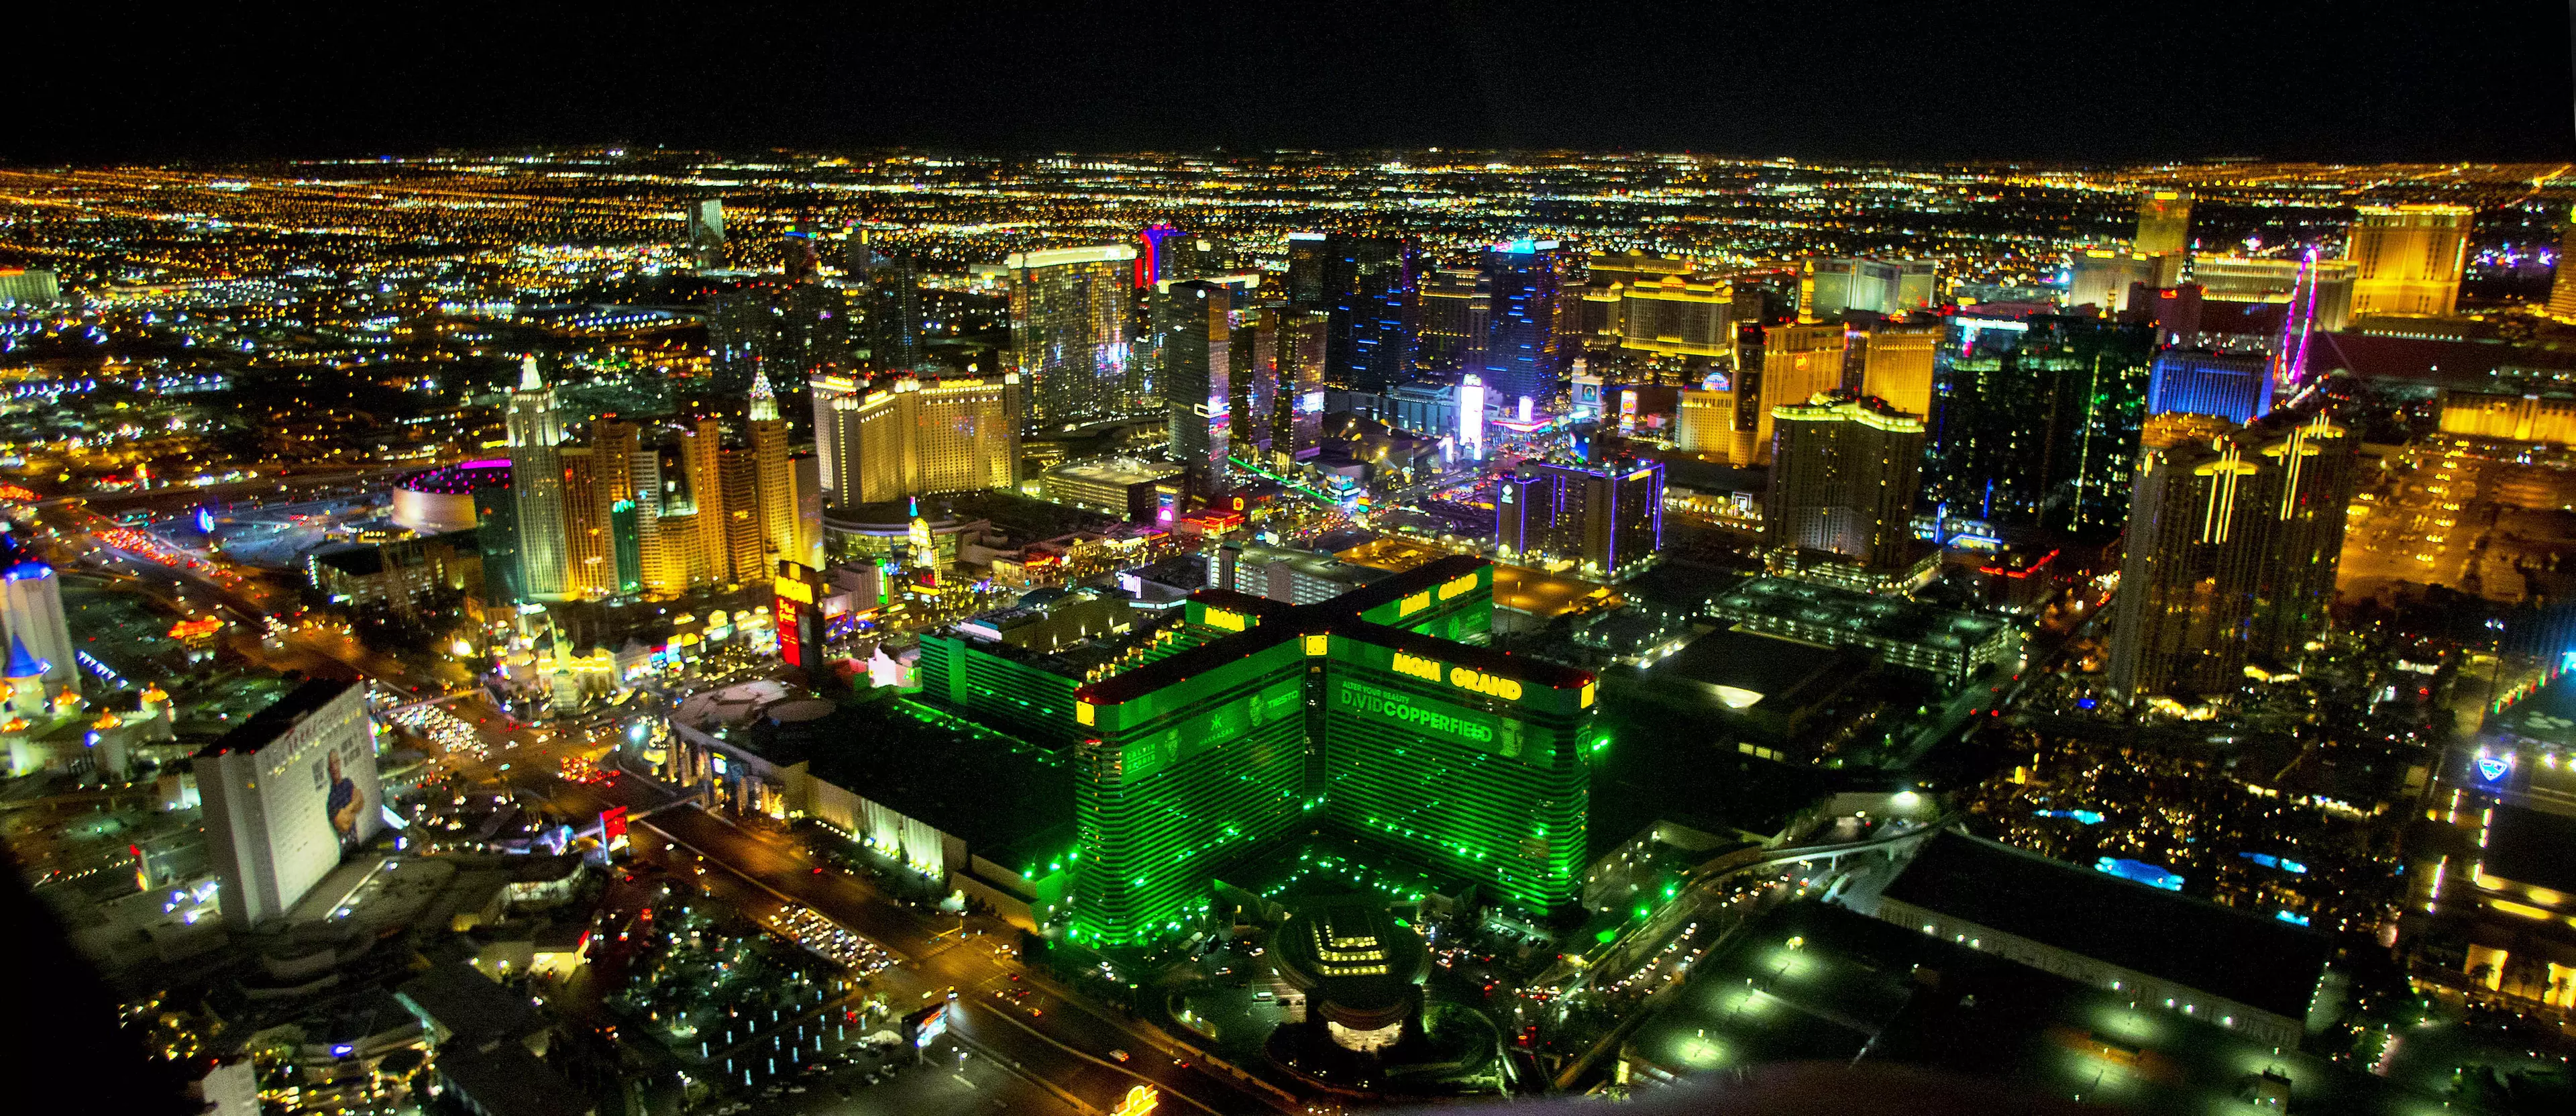 A night-time view of Las Vegas.